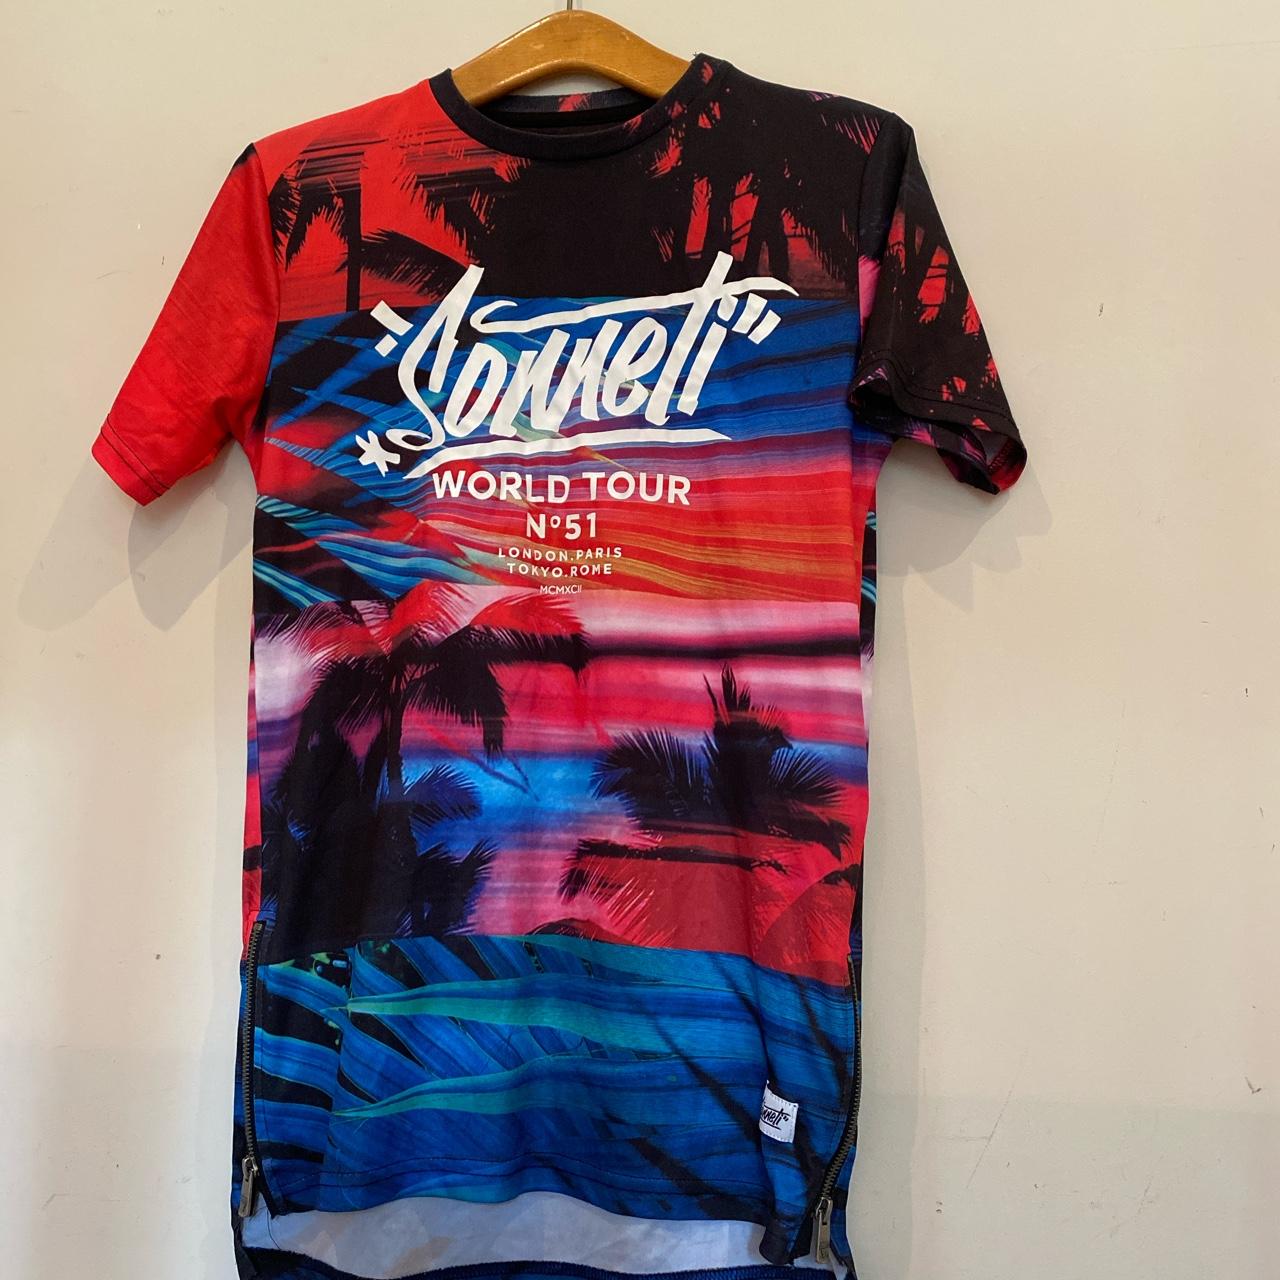 Sonneti World Tour T shirt, brand Never